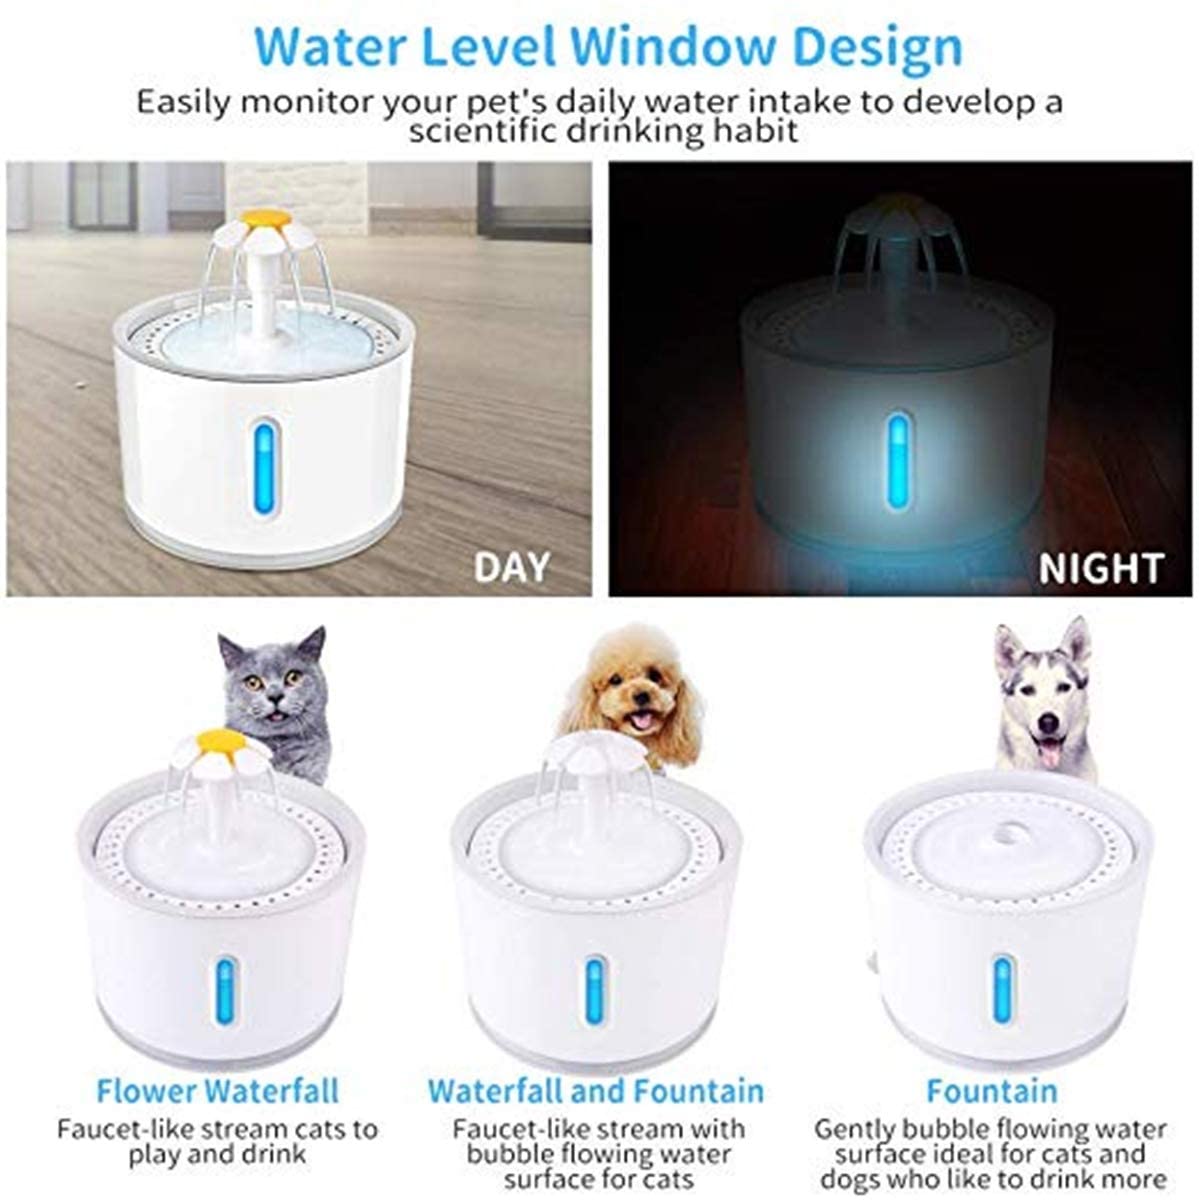  XUEE Fuente de Agua para Gatos, con Ventana de Nivel de Agua con visión Nocturna LED, Fuente para Mascotas con Bomba silenciosa de CC para Beber Perros y Gatos- (envíe Cuatro filtros),A 